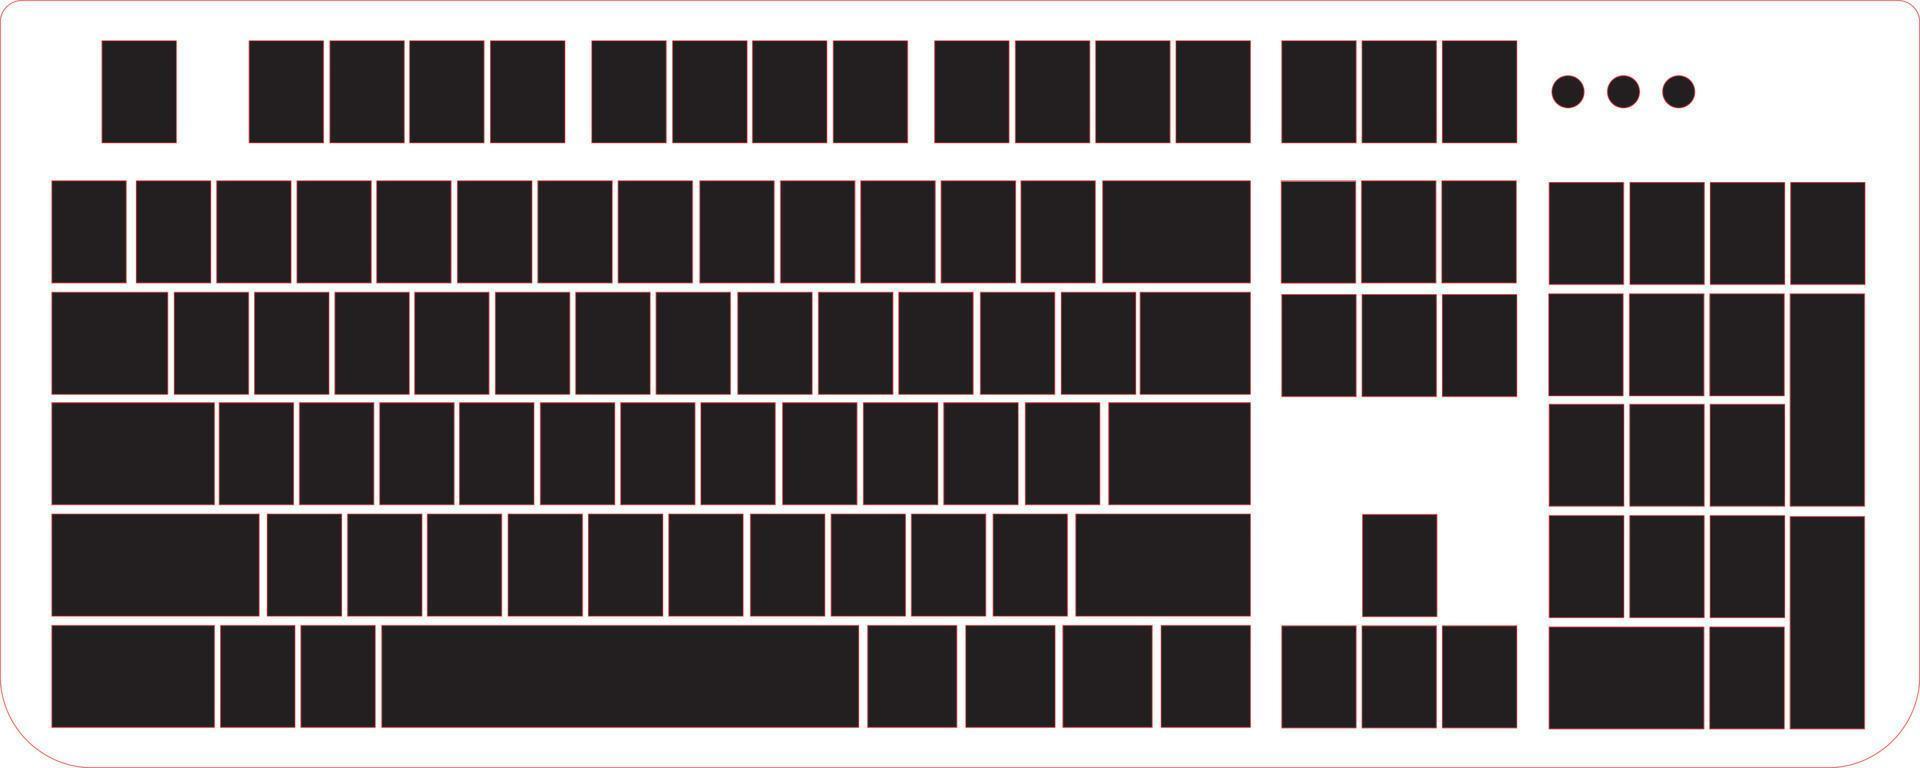 Blank pc keyboard icon illustration communication typing writing ...